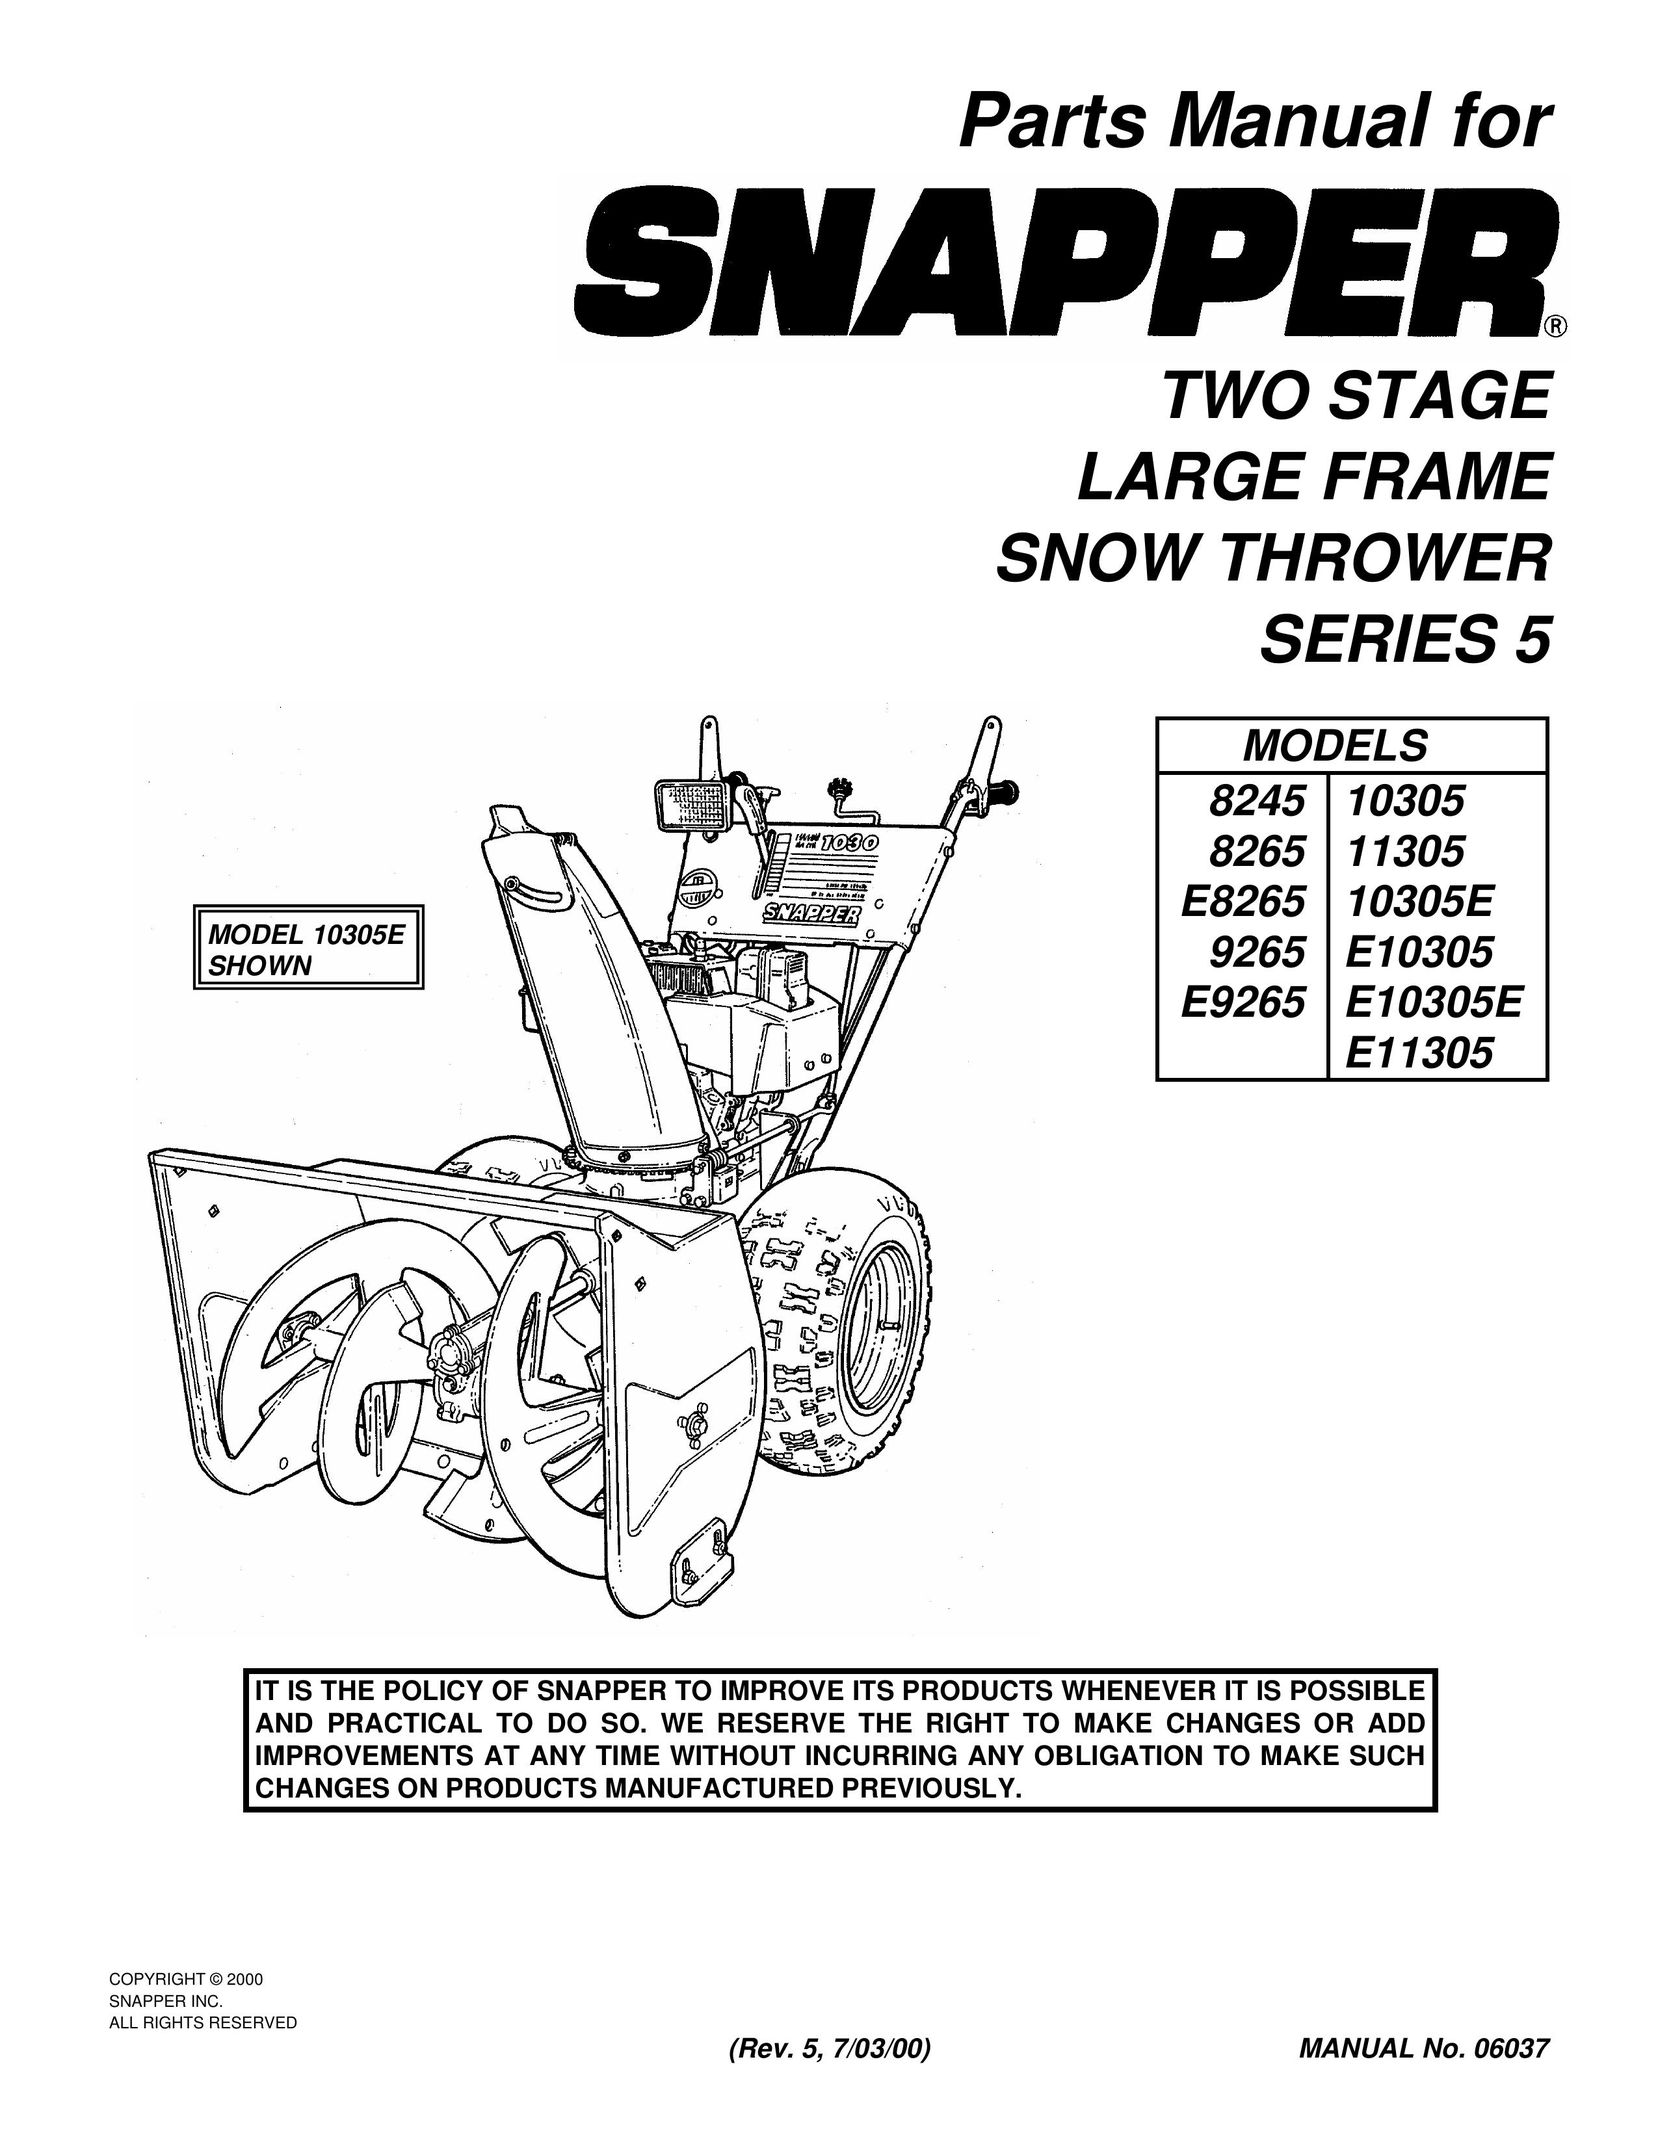 Snapper 11305 VCR User Manual